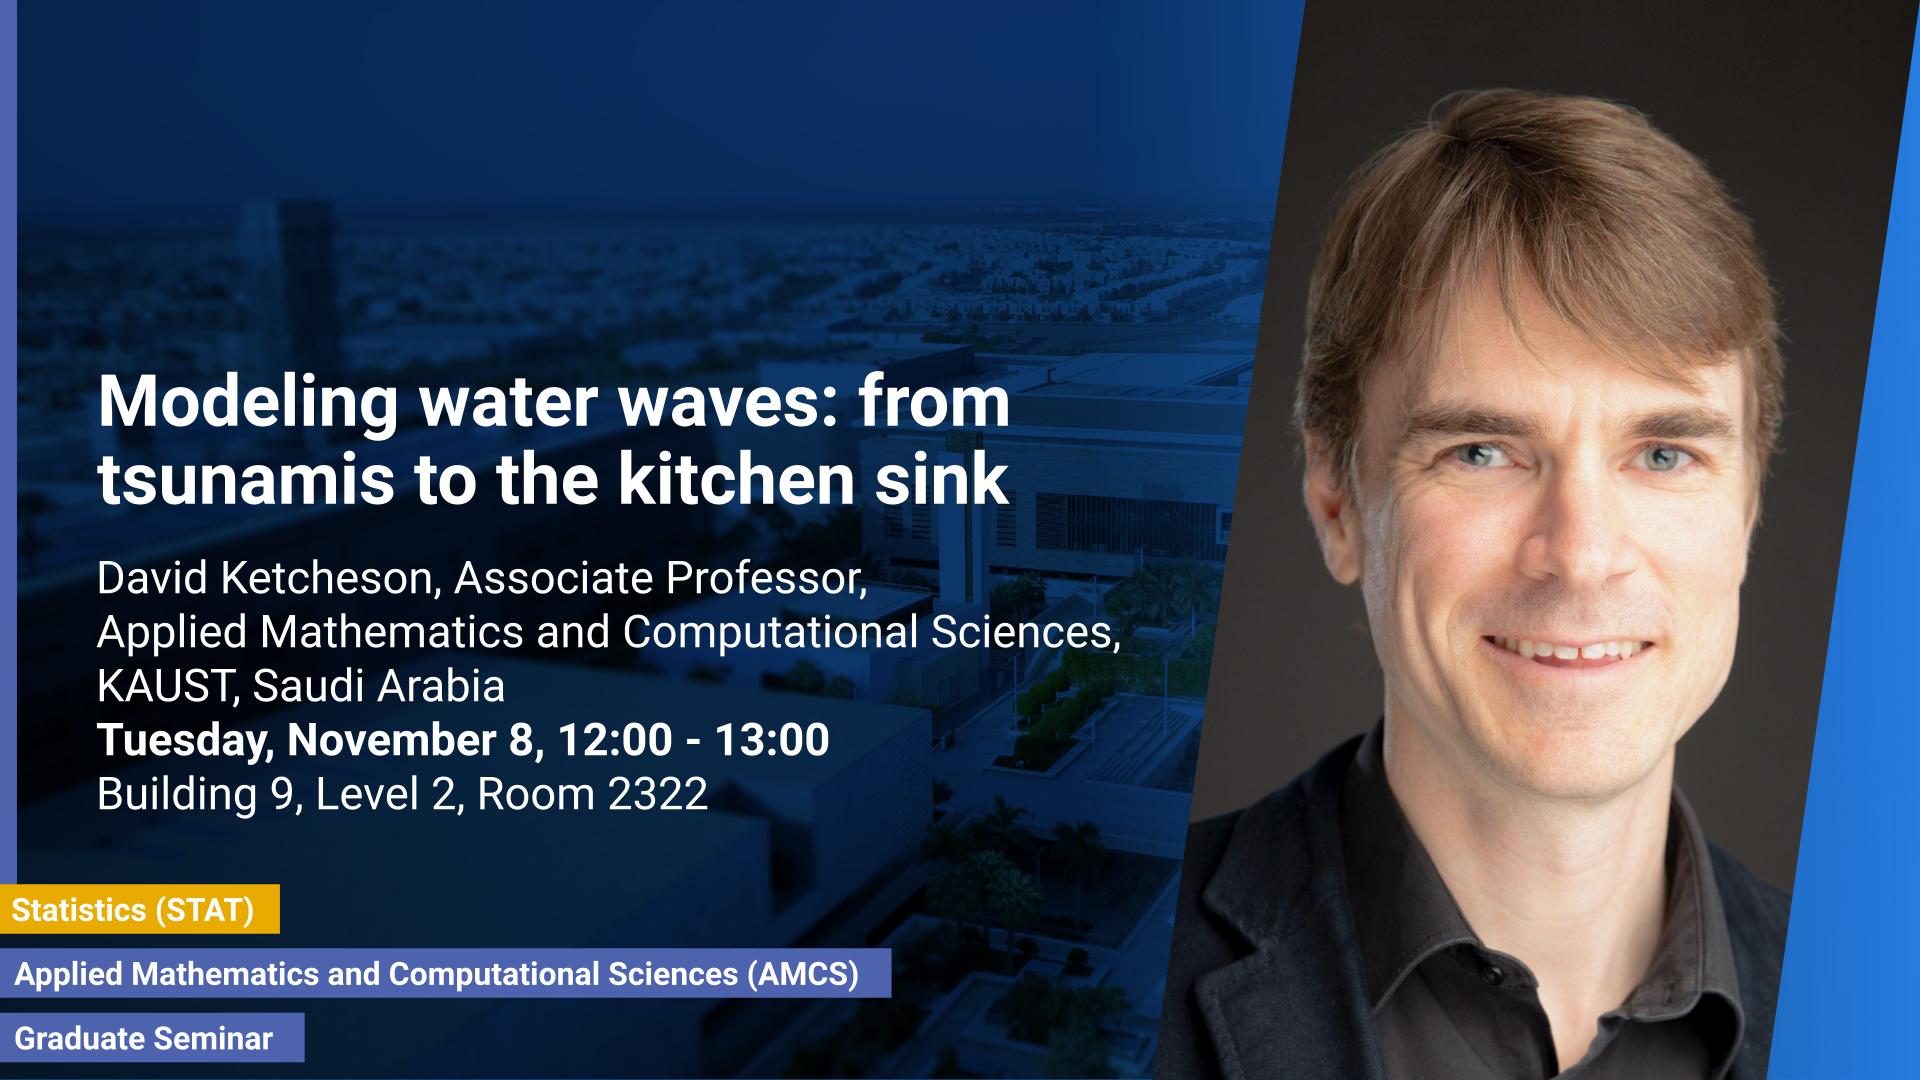 KAUST-CEMSE-AMCS-STAT-Graduate Seminar-David-Ketcheson-Modeling-water-waves